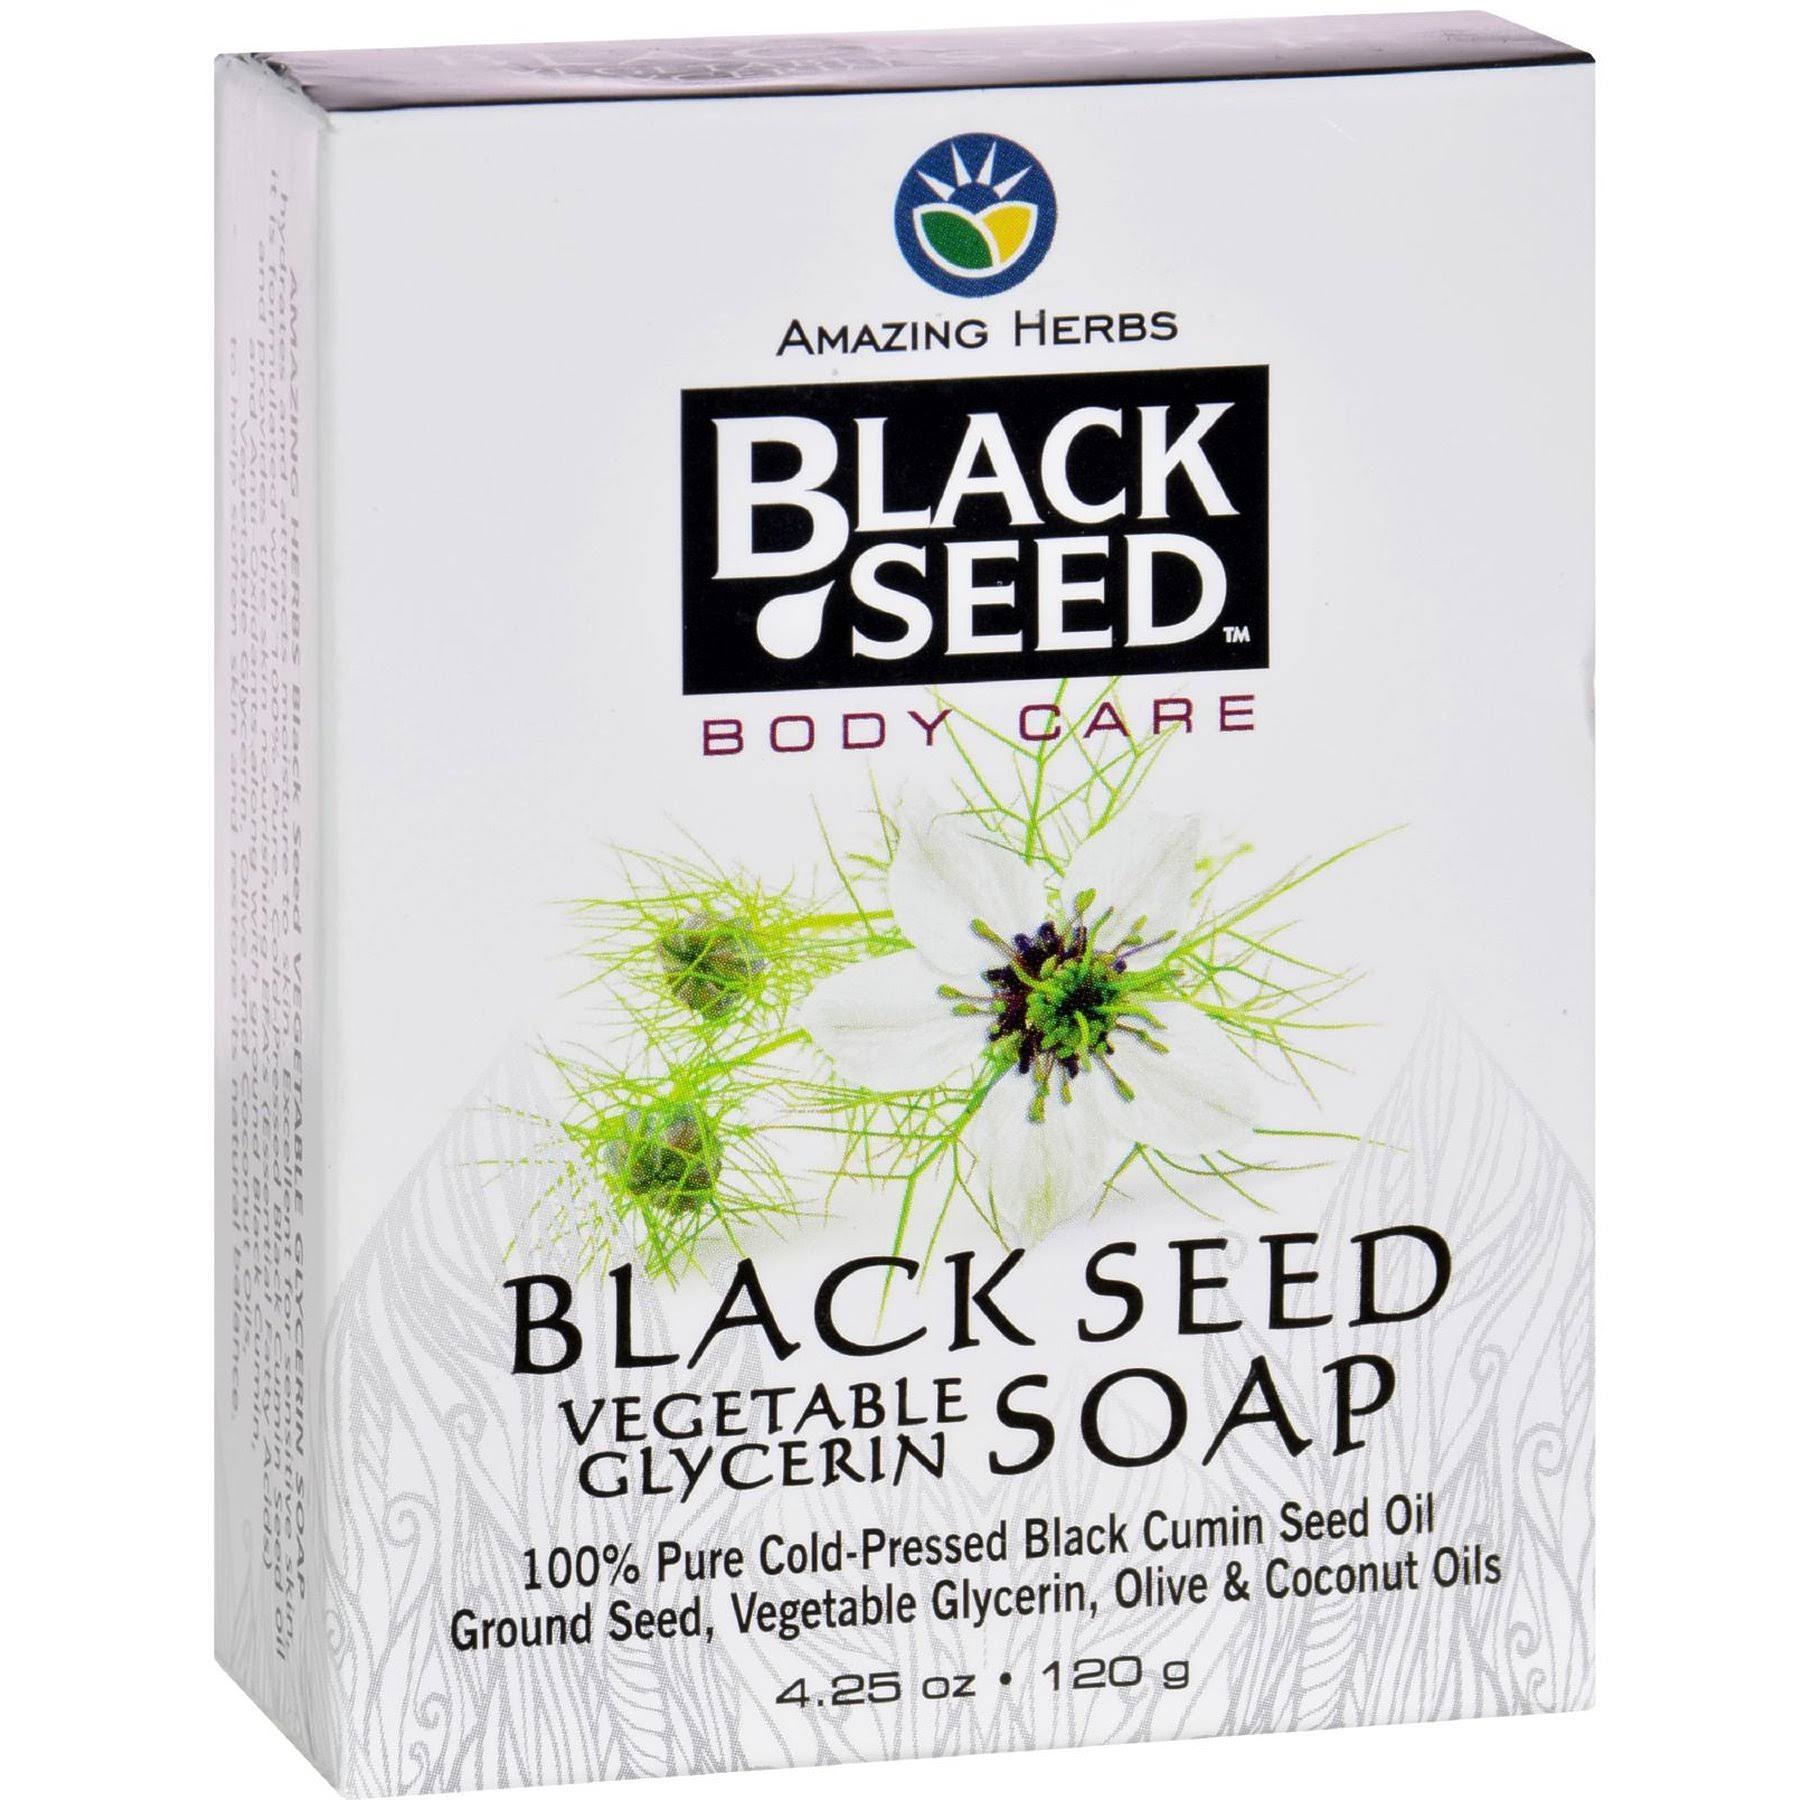 Black Seed Amazing Herbs Vegetable Glycerin Soap - 4.25oz